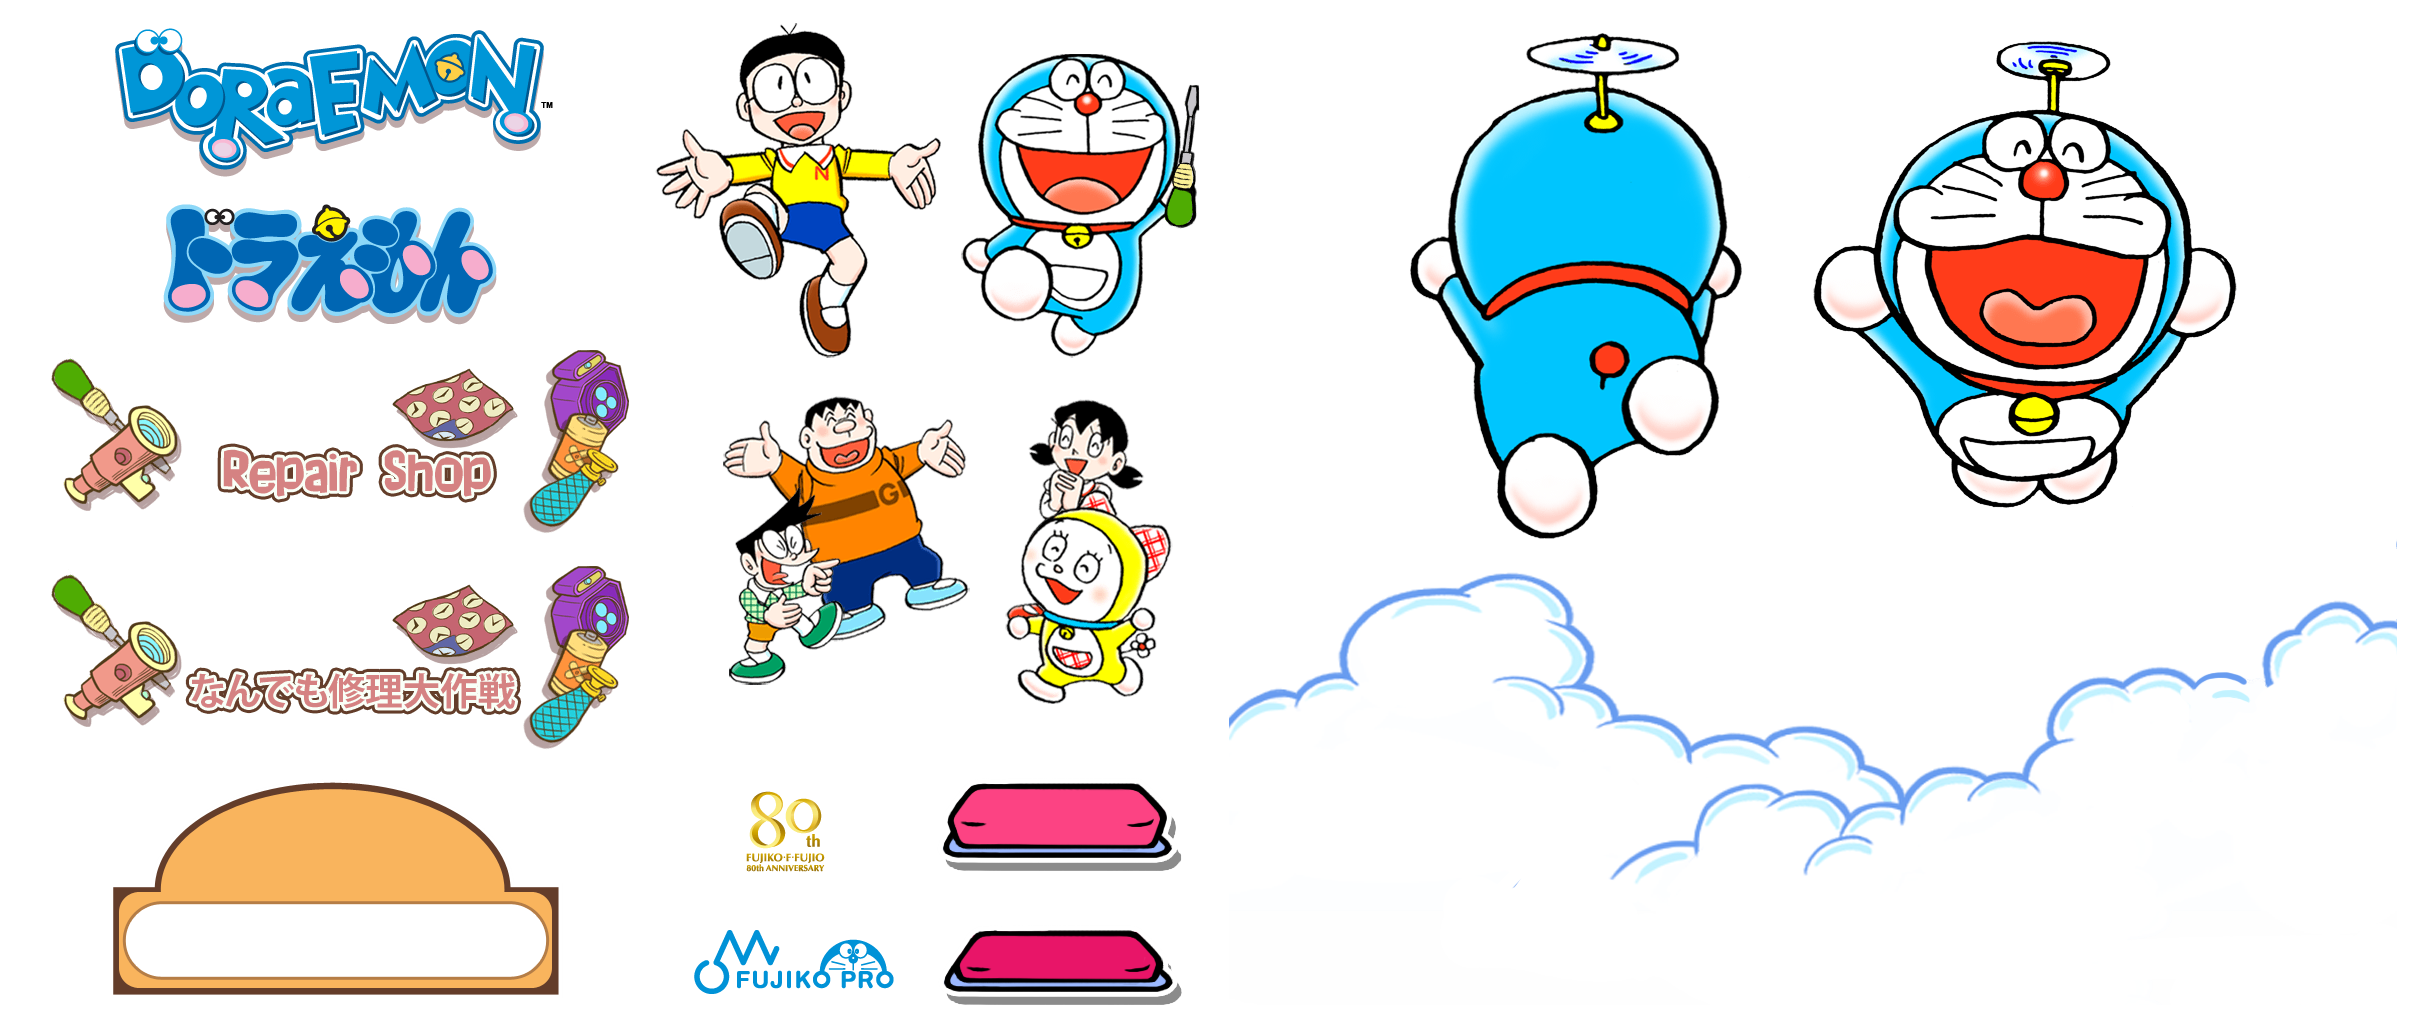 Doraemon Repair Shop - Title Screen